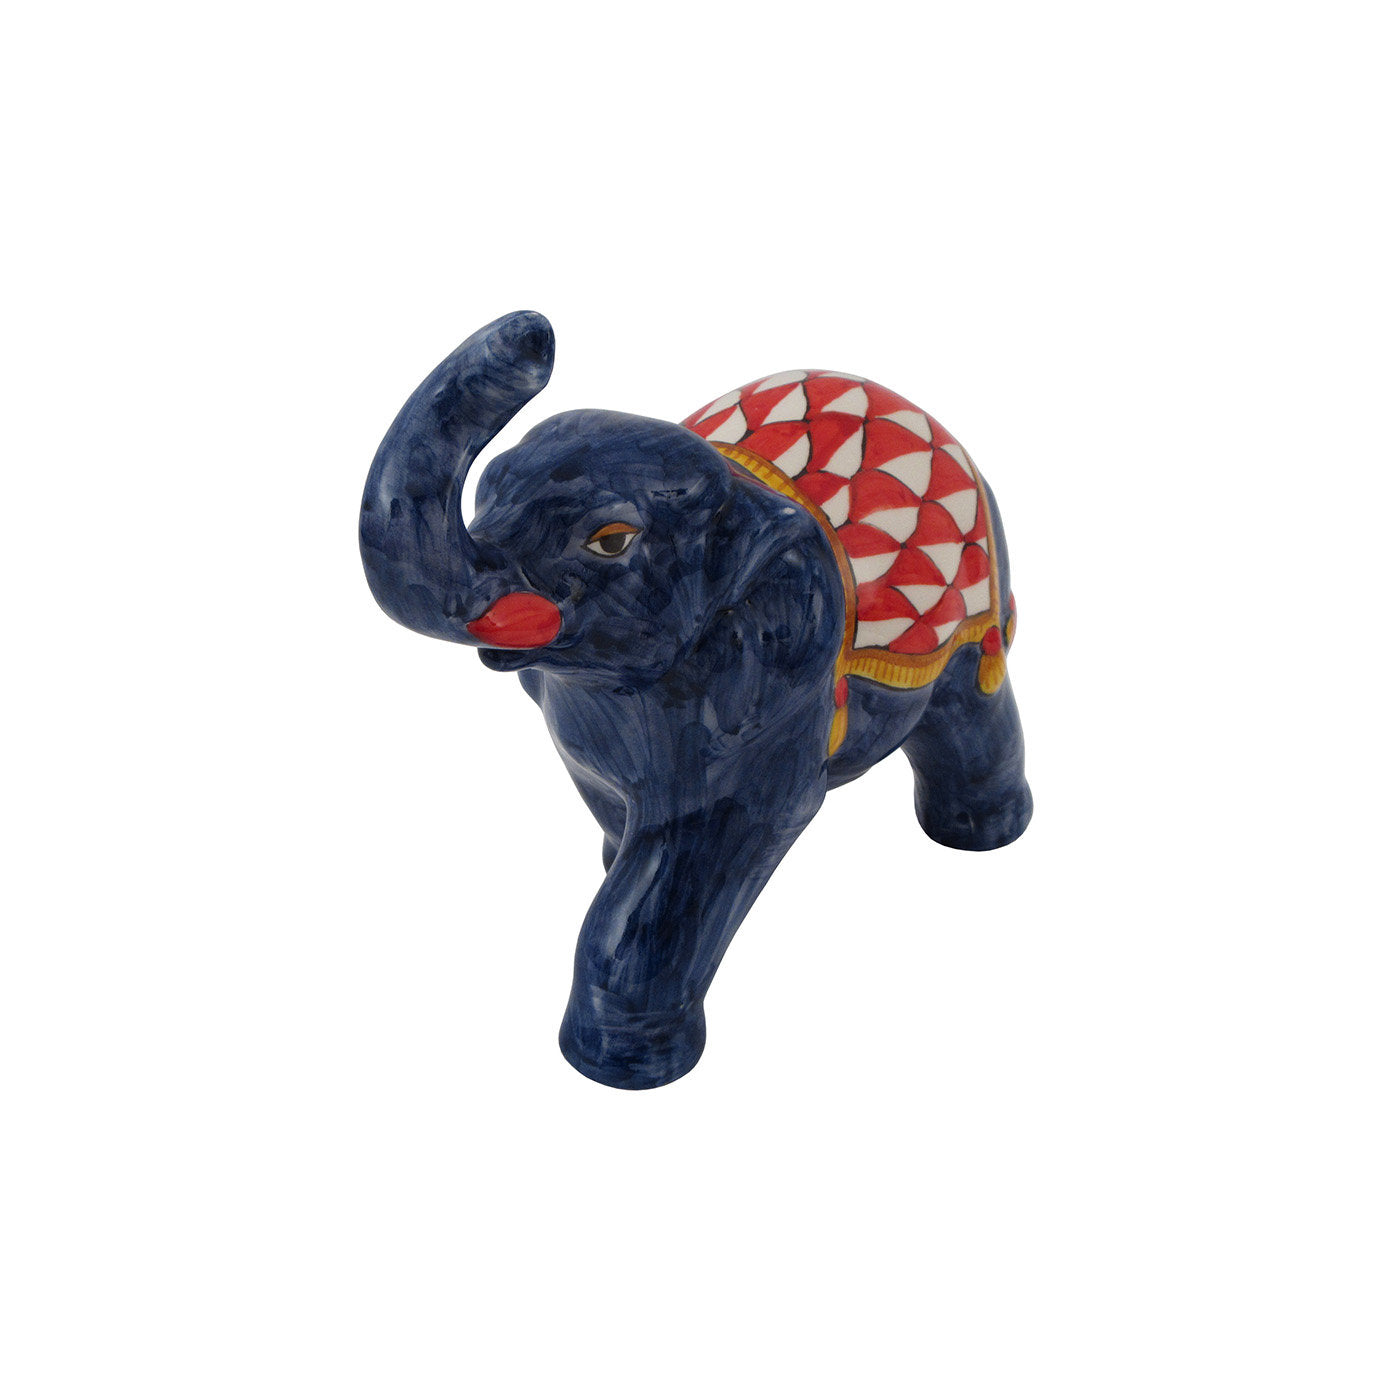 Blue Elephant Figurine - Alternative view 1